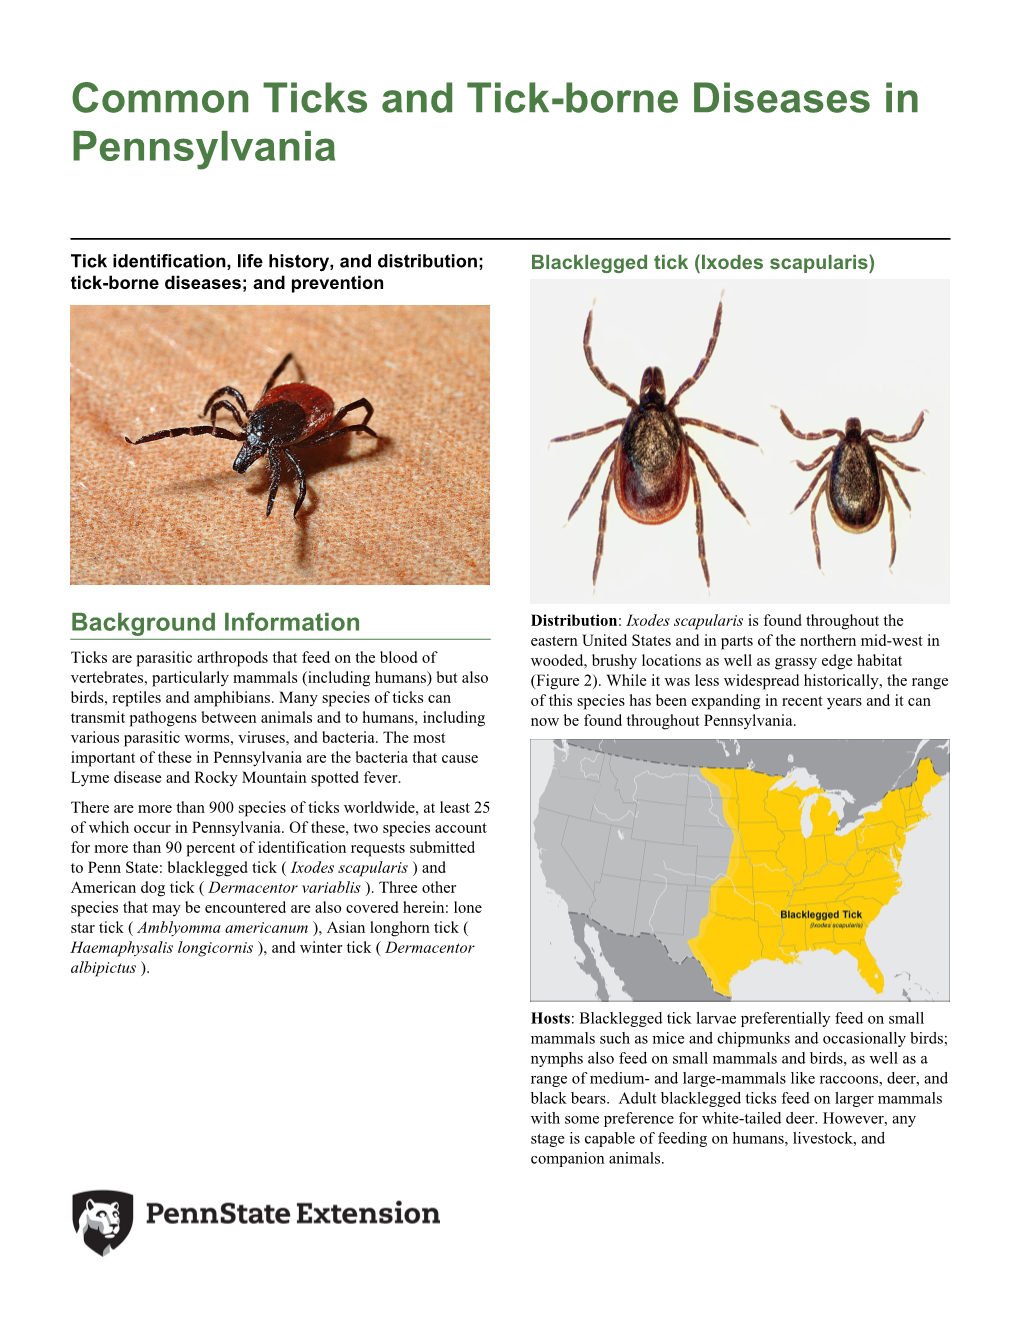 Common Ticks and Tick-Borne Diseases in Pennsylvania